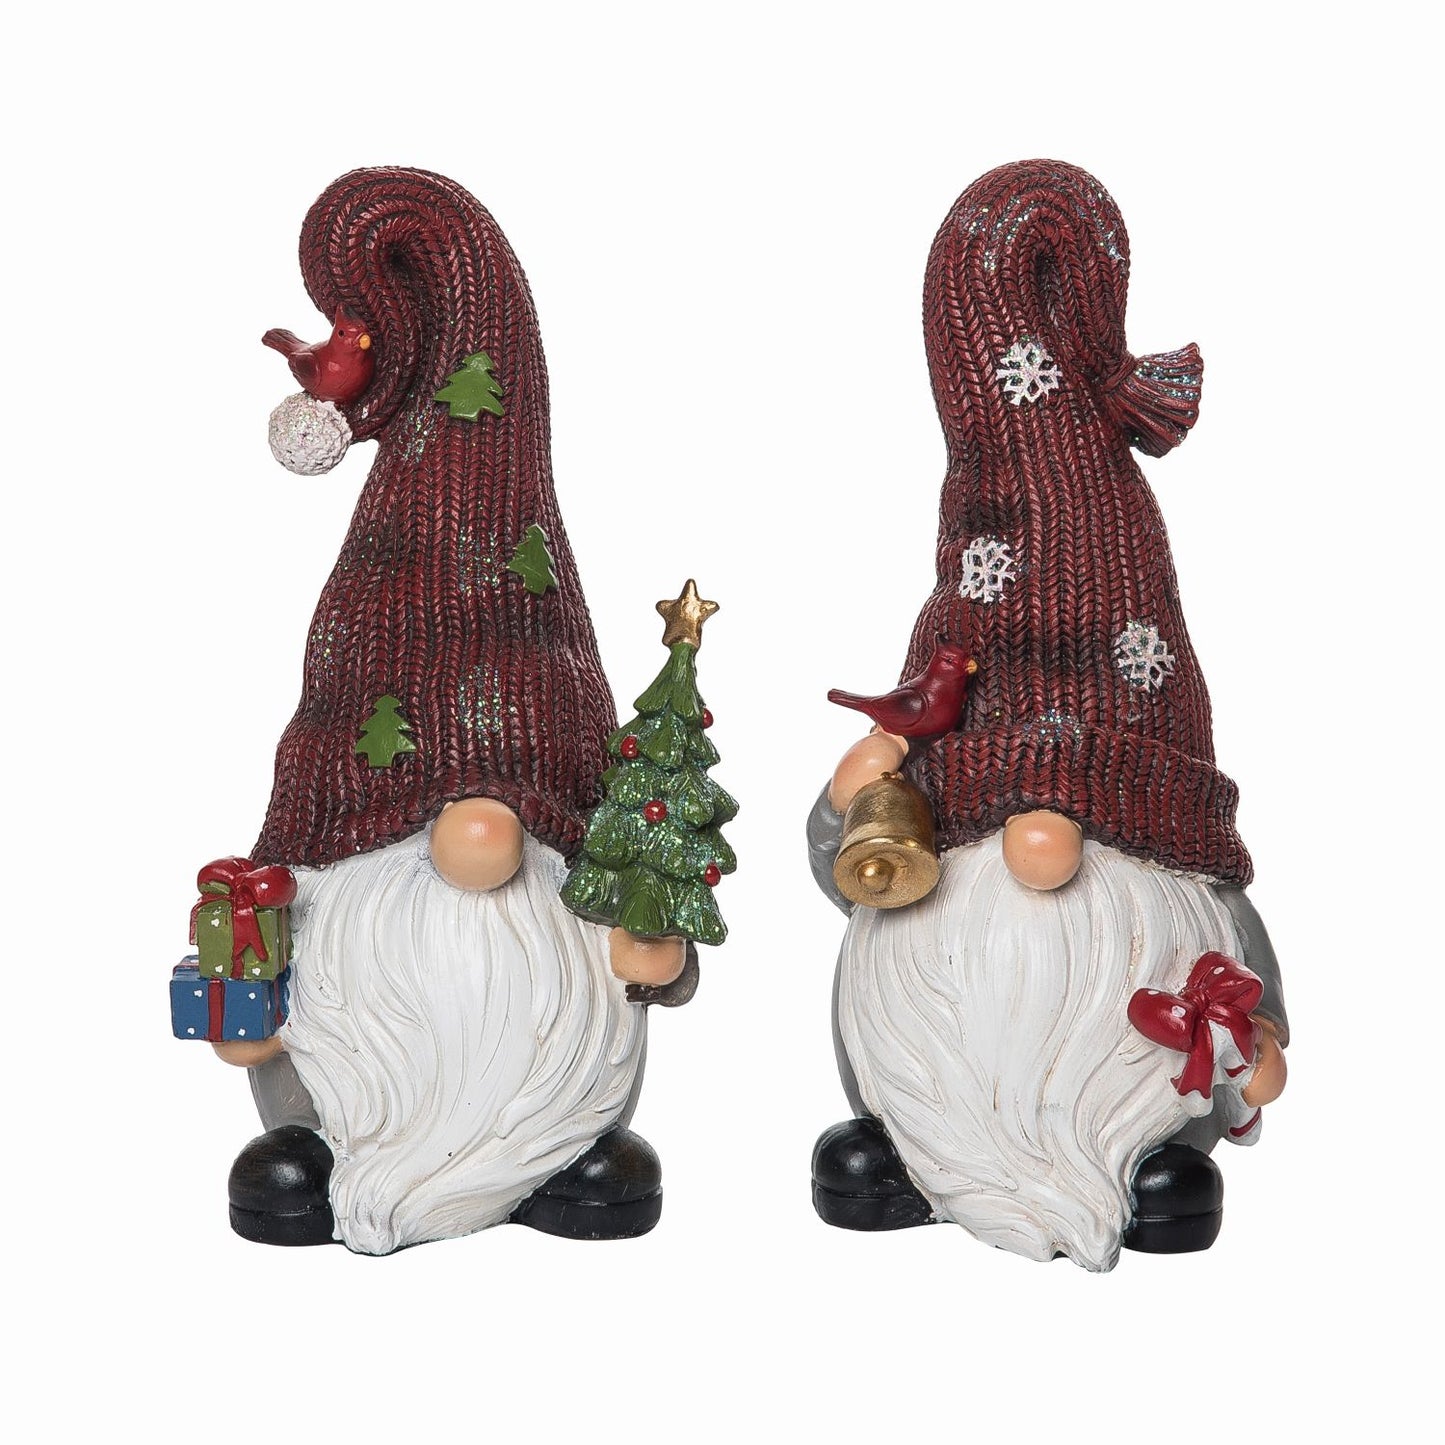 Transpac Resin Christmas Gnome Figurine, Set Of 2, Assortment